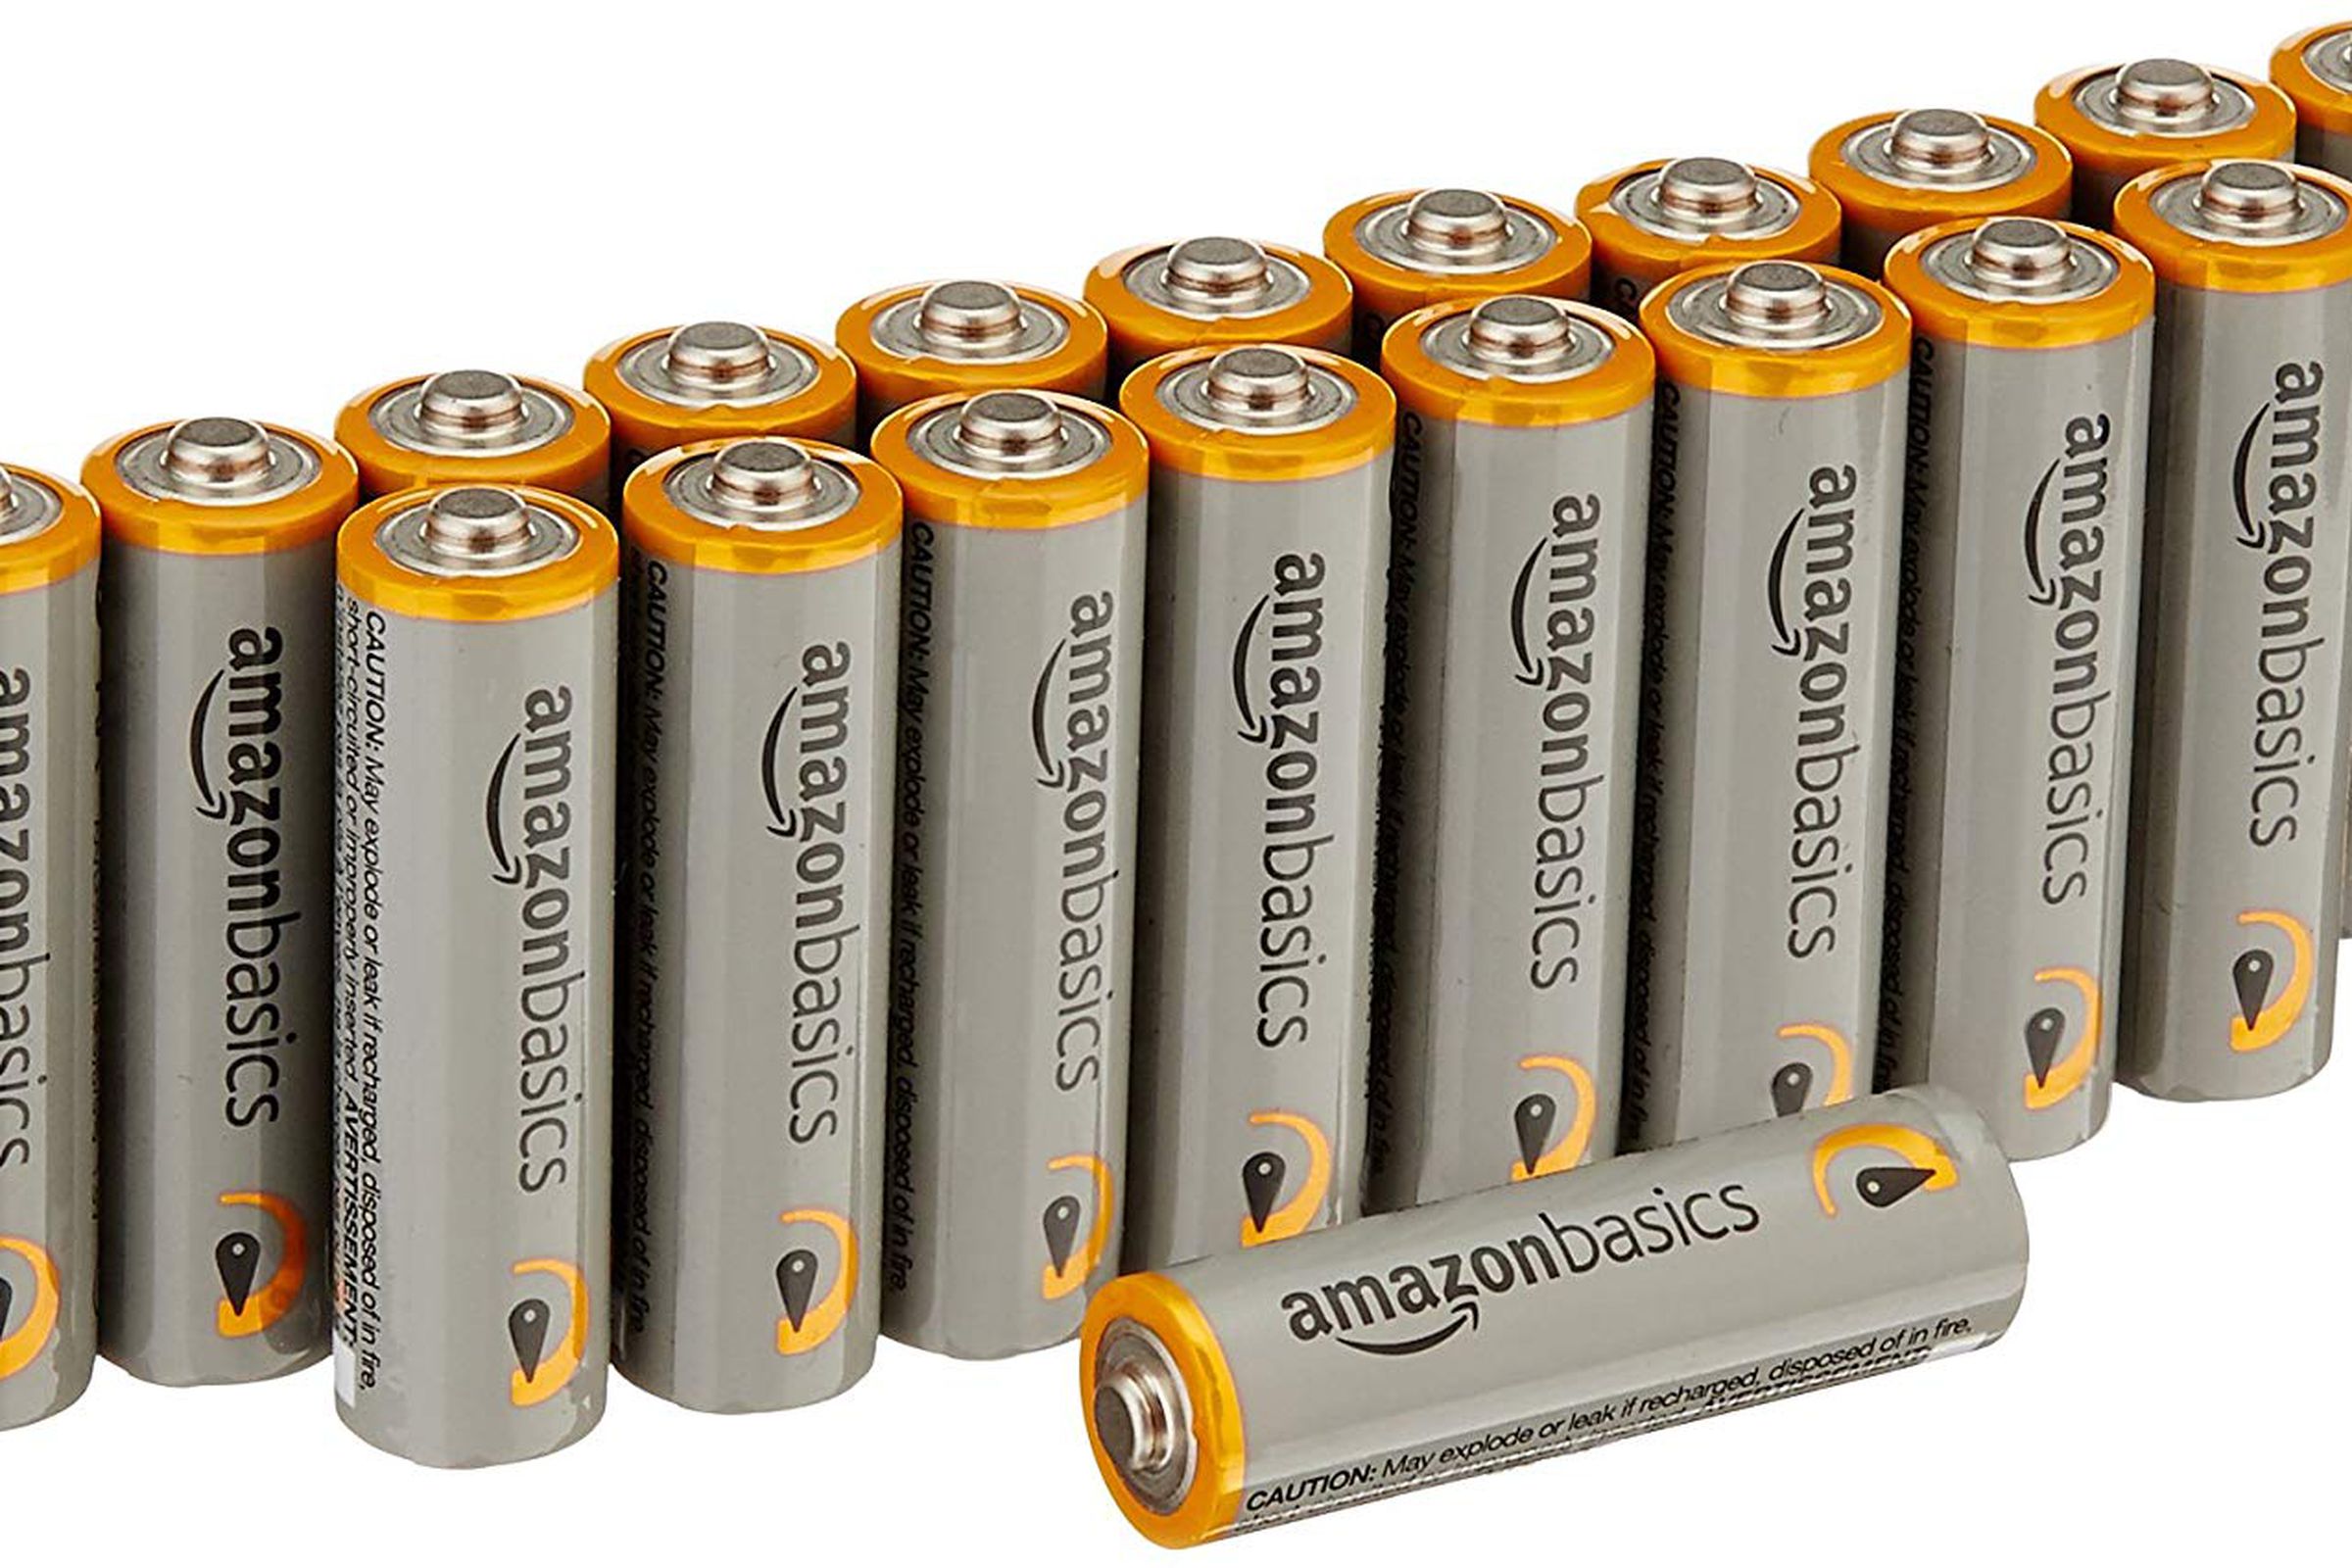 AmazonBasics AA battery